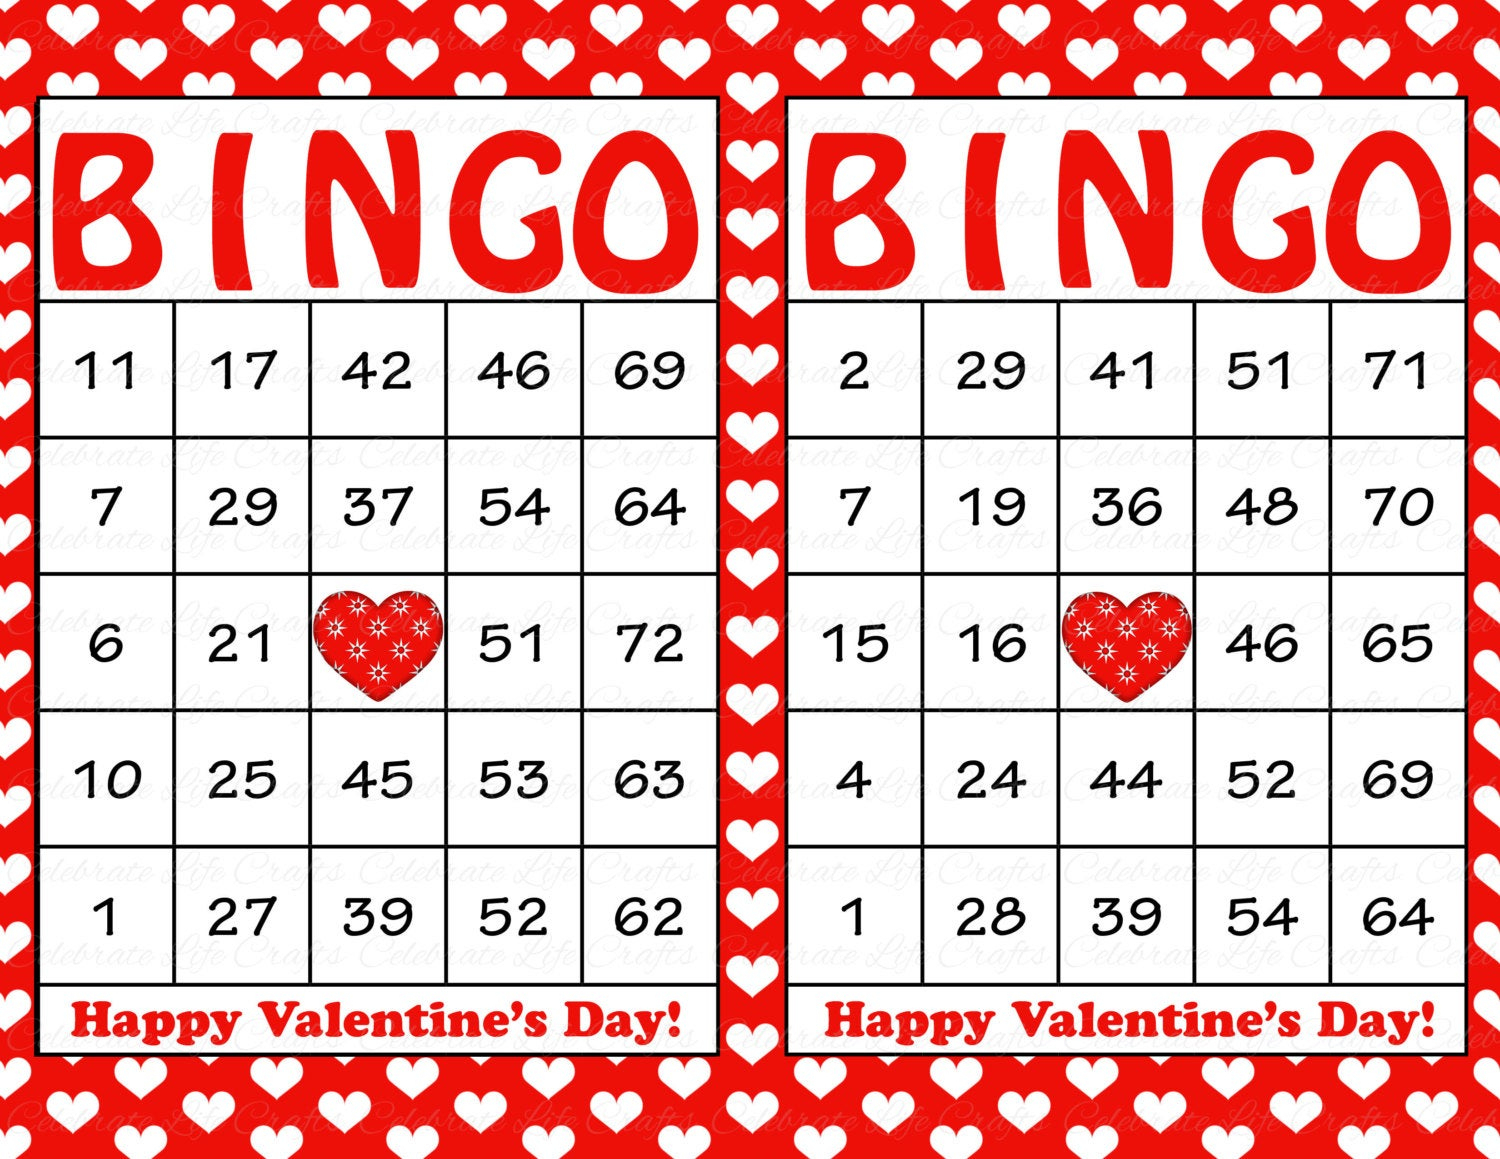 Printable Bingo Cards 1 75 Free Printable Bingo Cards